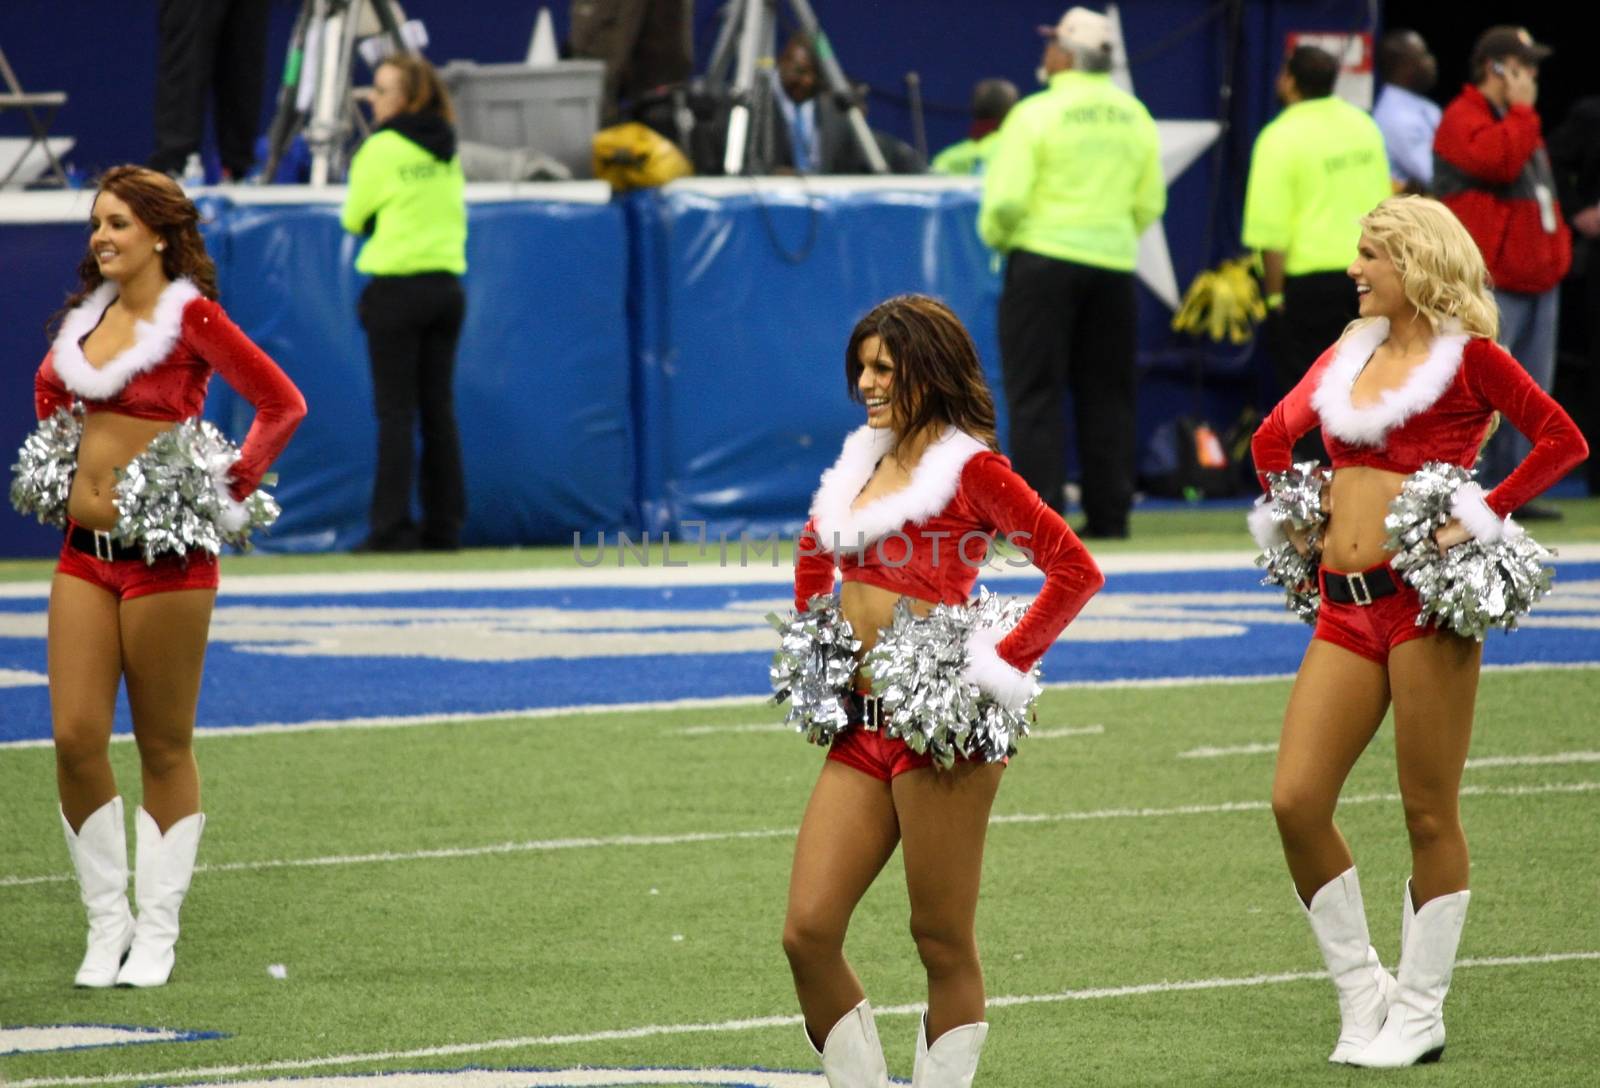 Dallas Cheerleaders in Red by bellafotosolo